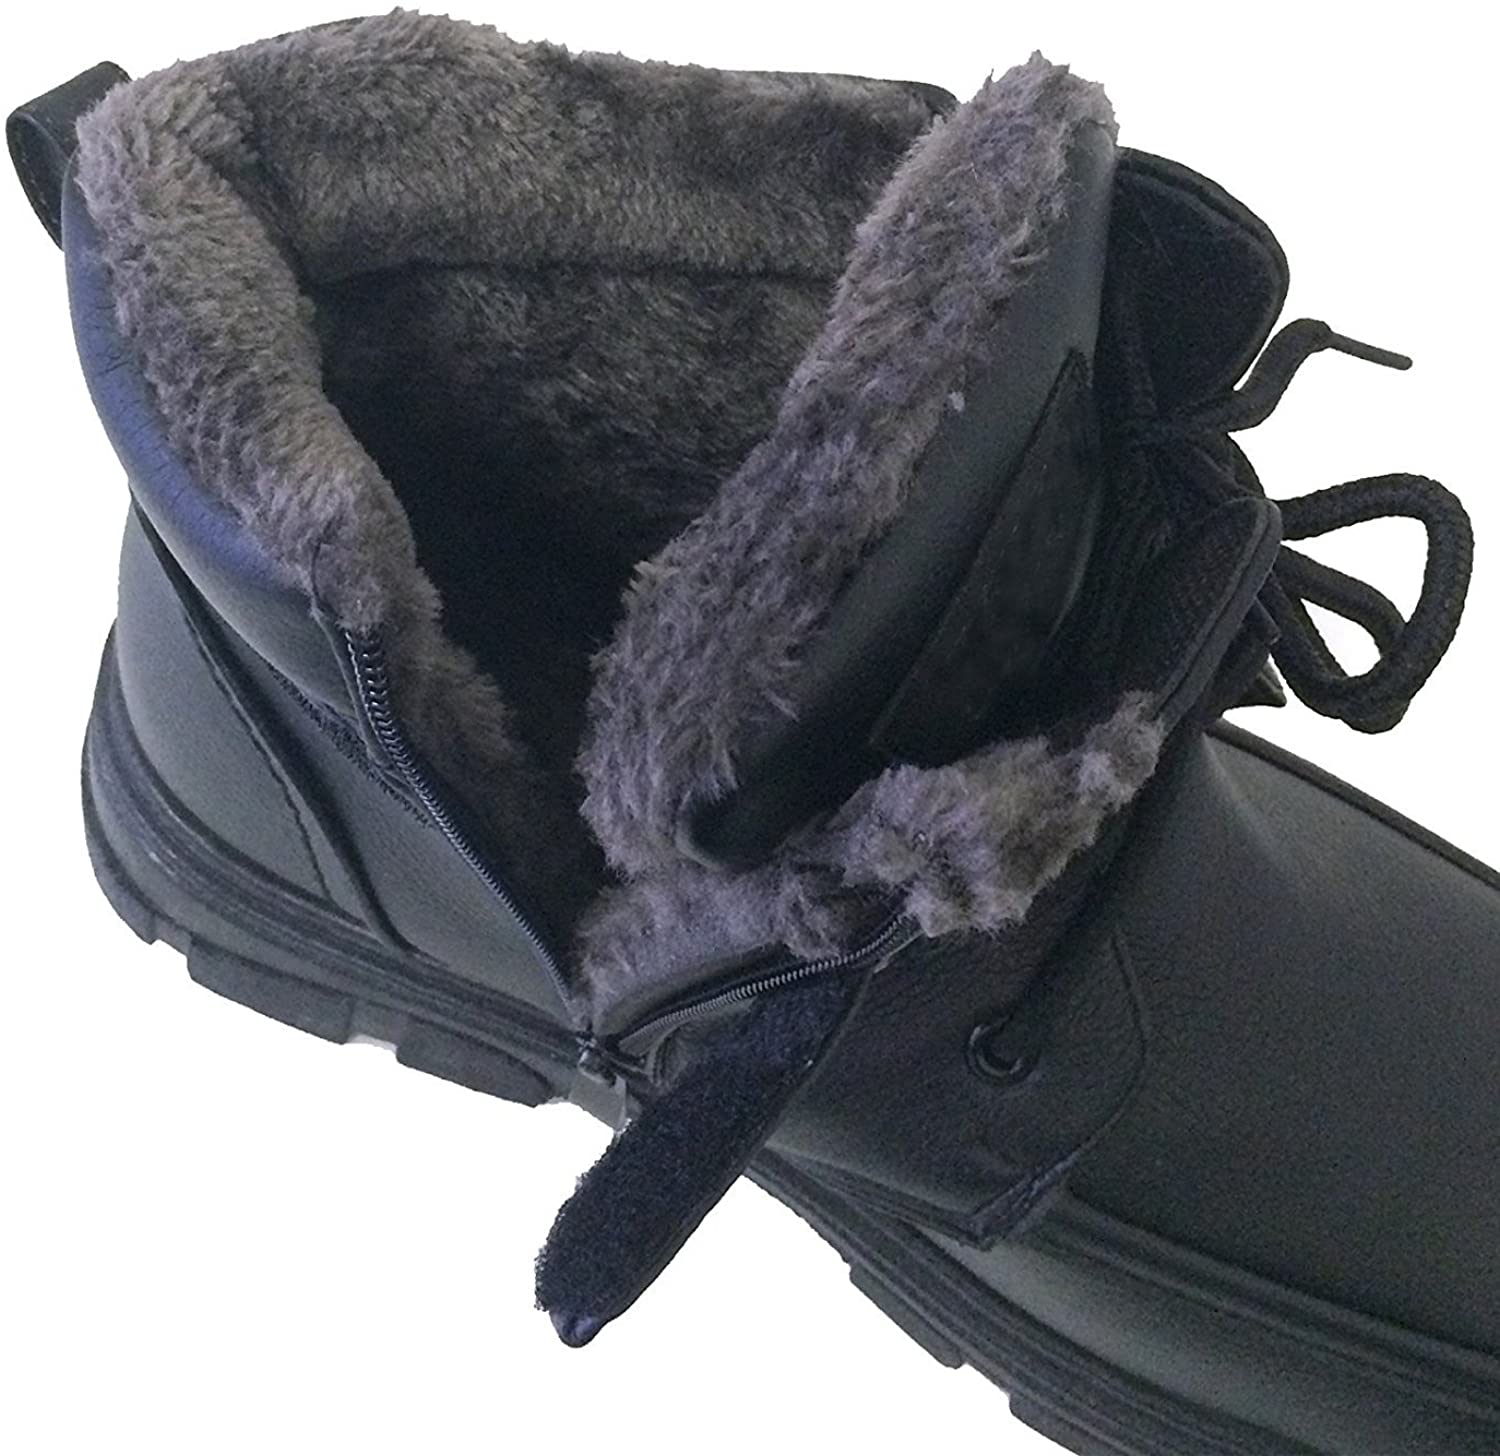 Men's Winter Boots Ankle Faux Fur Full Lined Lace up Side Zipper Shoes ...